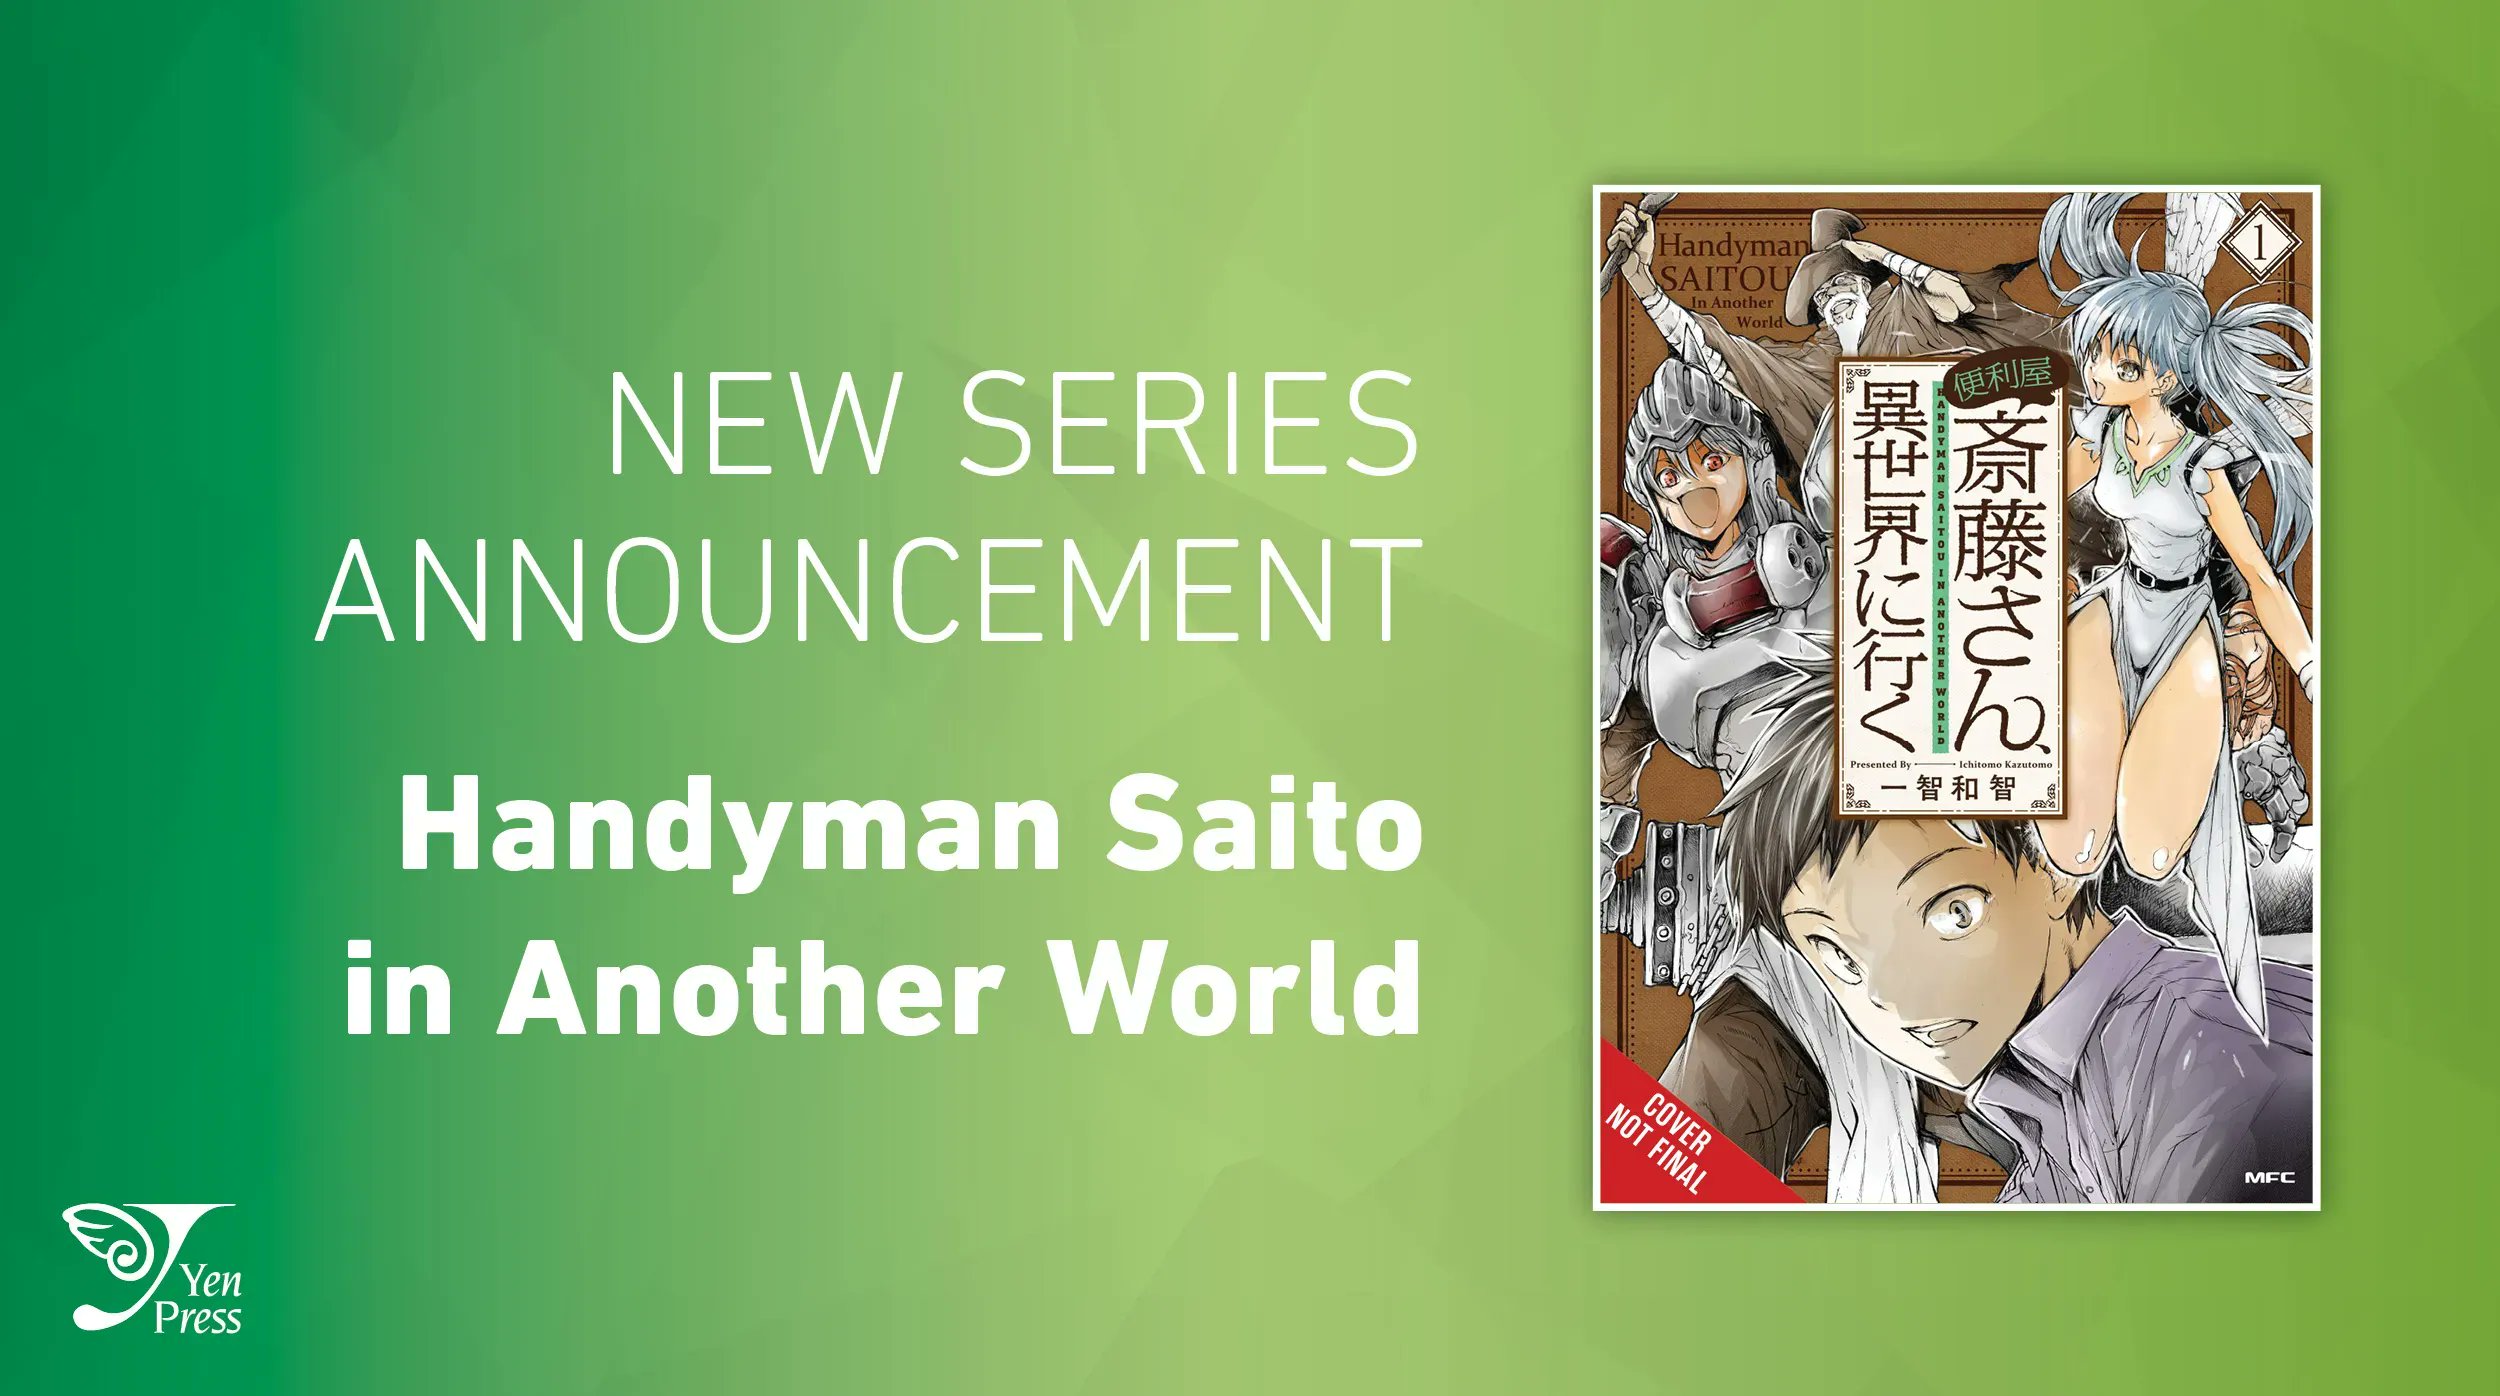 Handyman Saitou in another world em português brasileiro - Crunchyroll